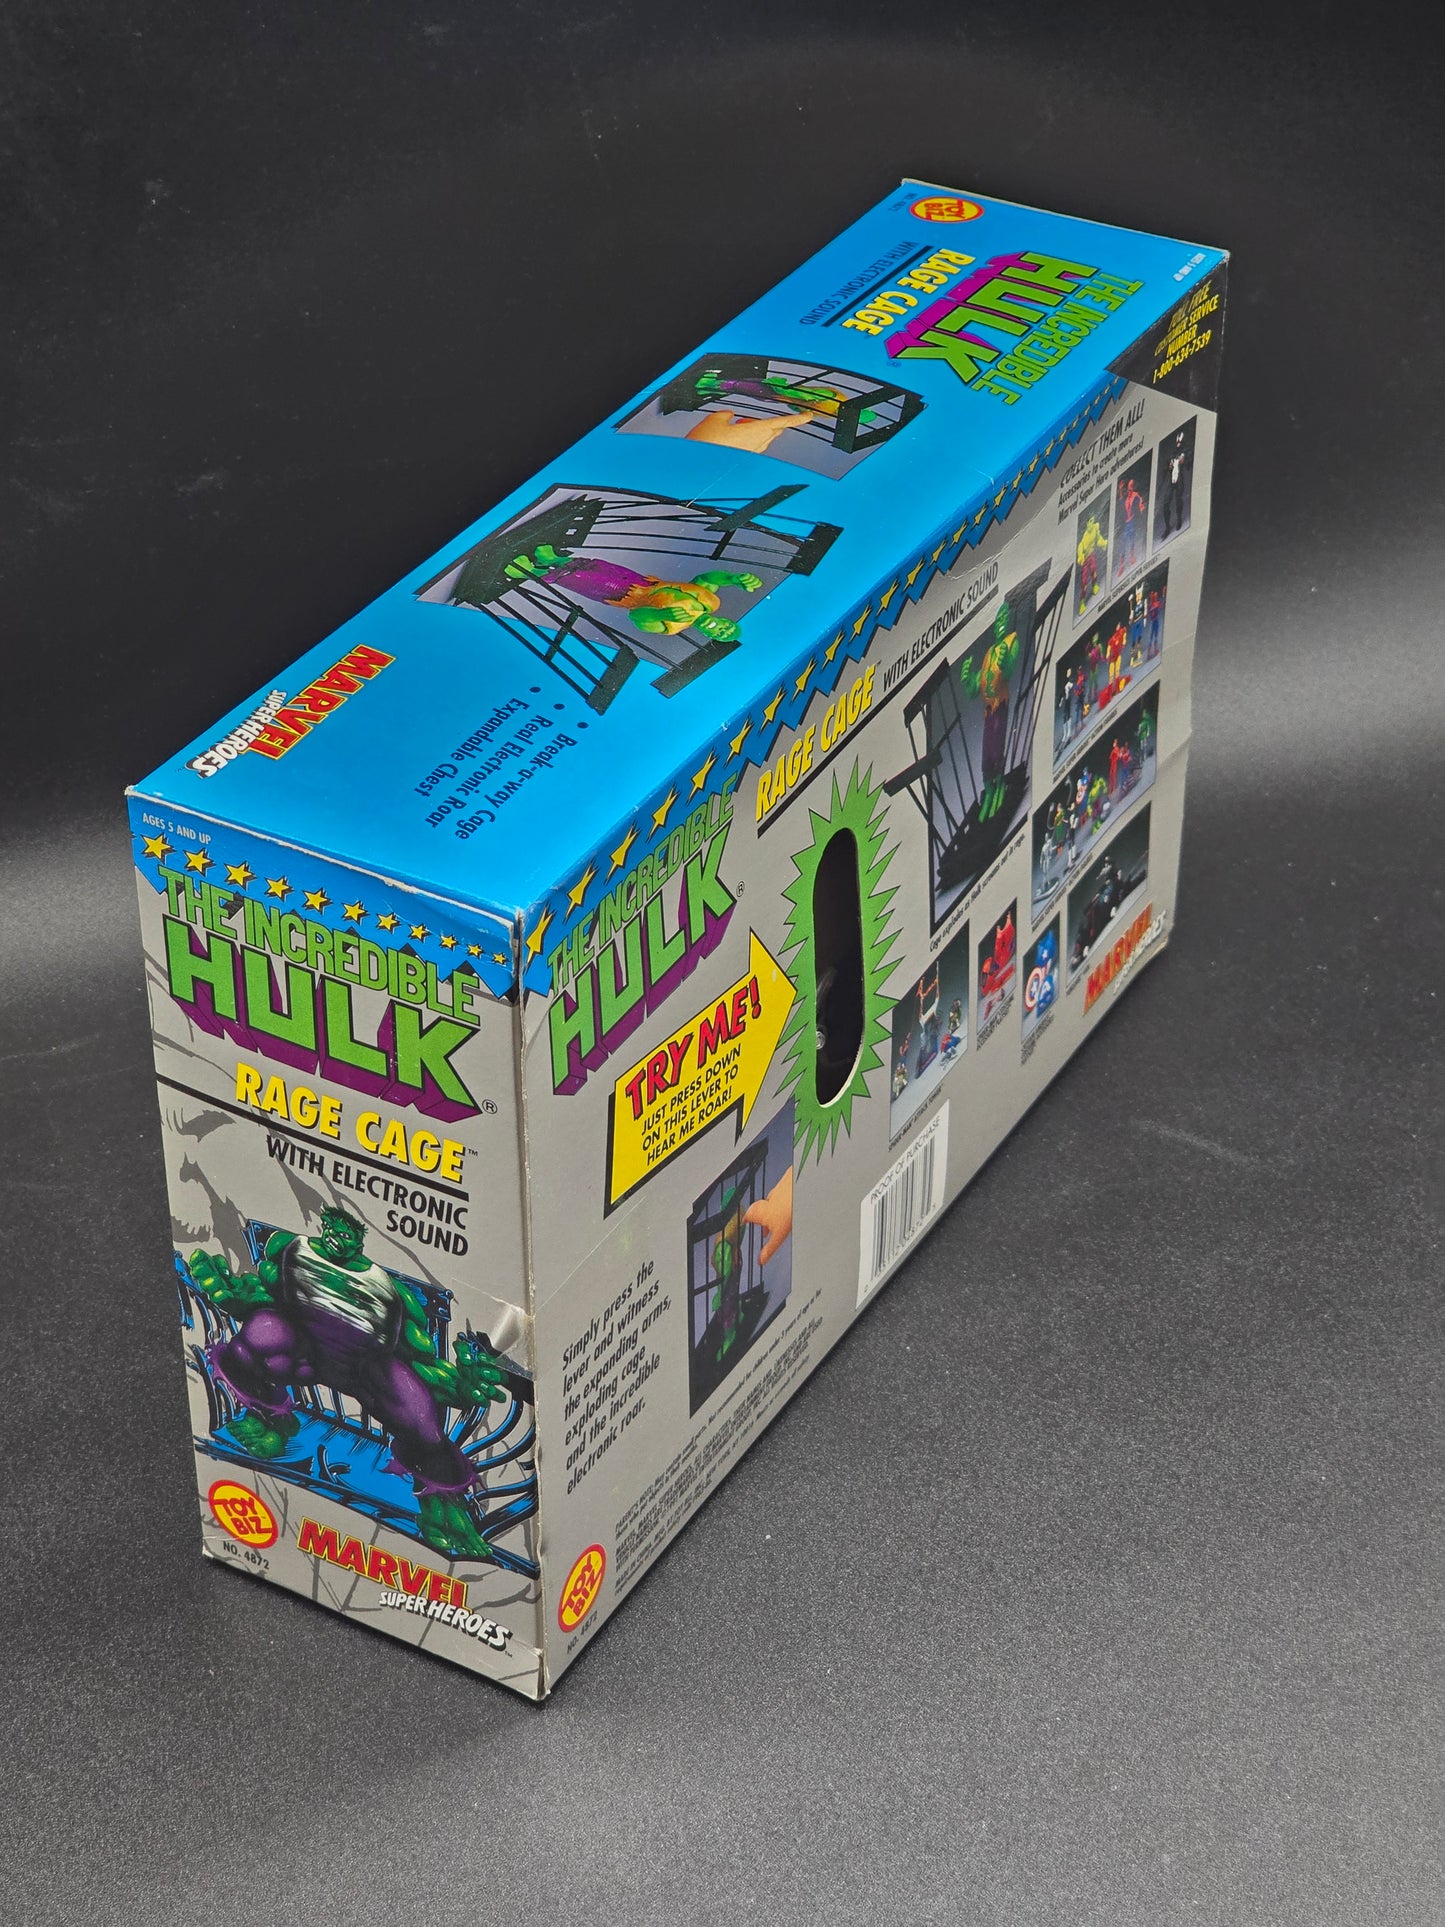 The Incredible Hulk Rage Cage Toybiz Marvel Super Heroes 1991